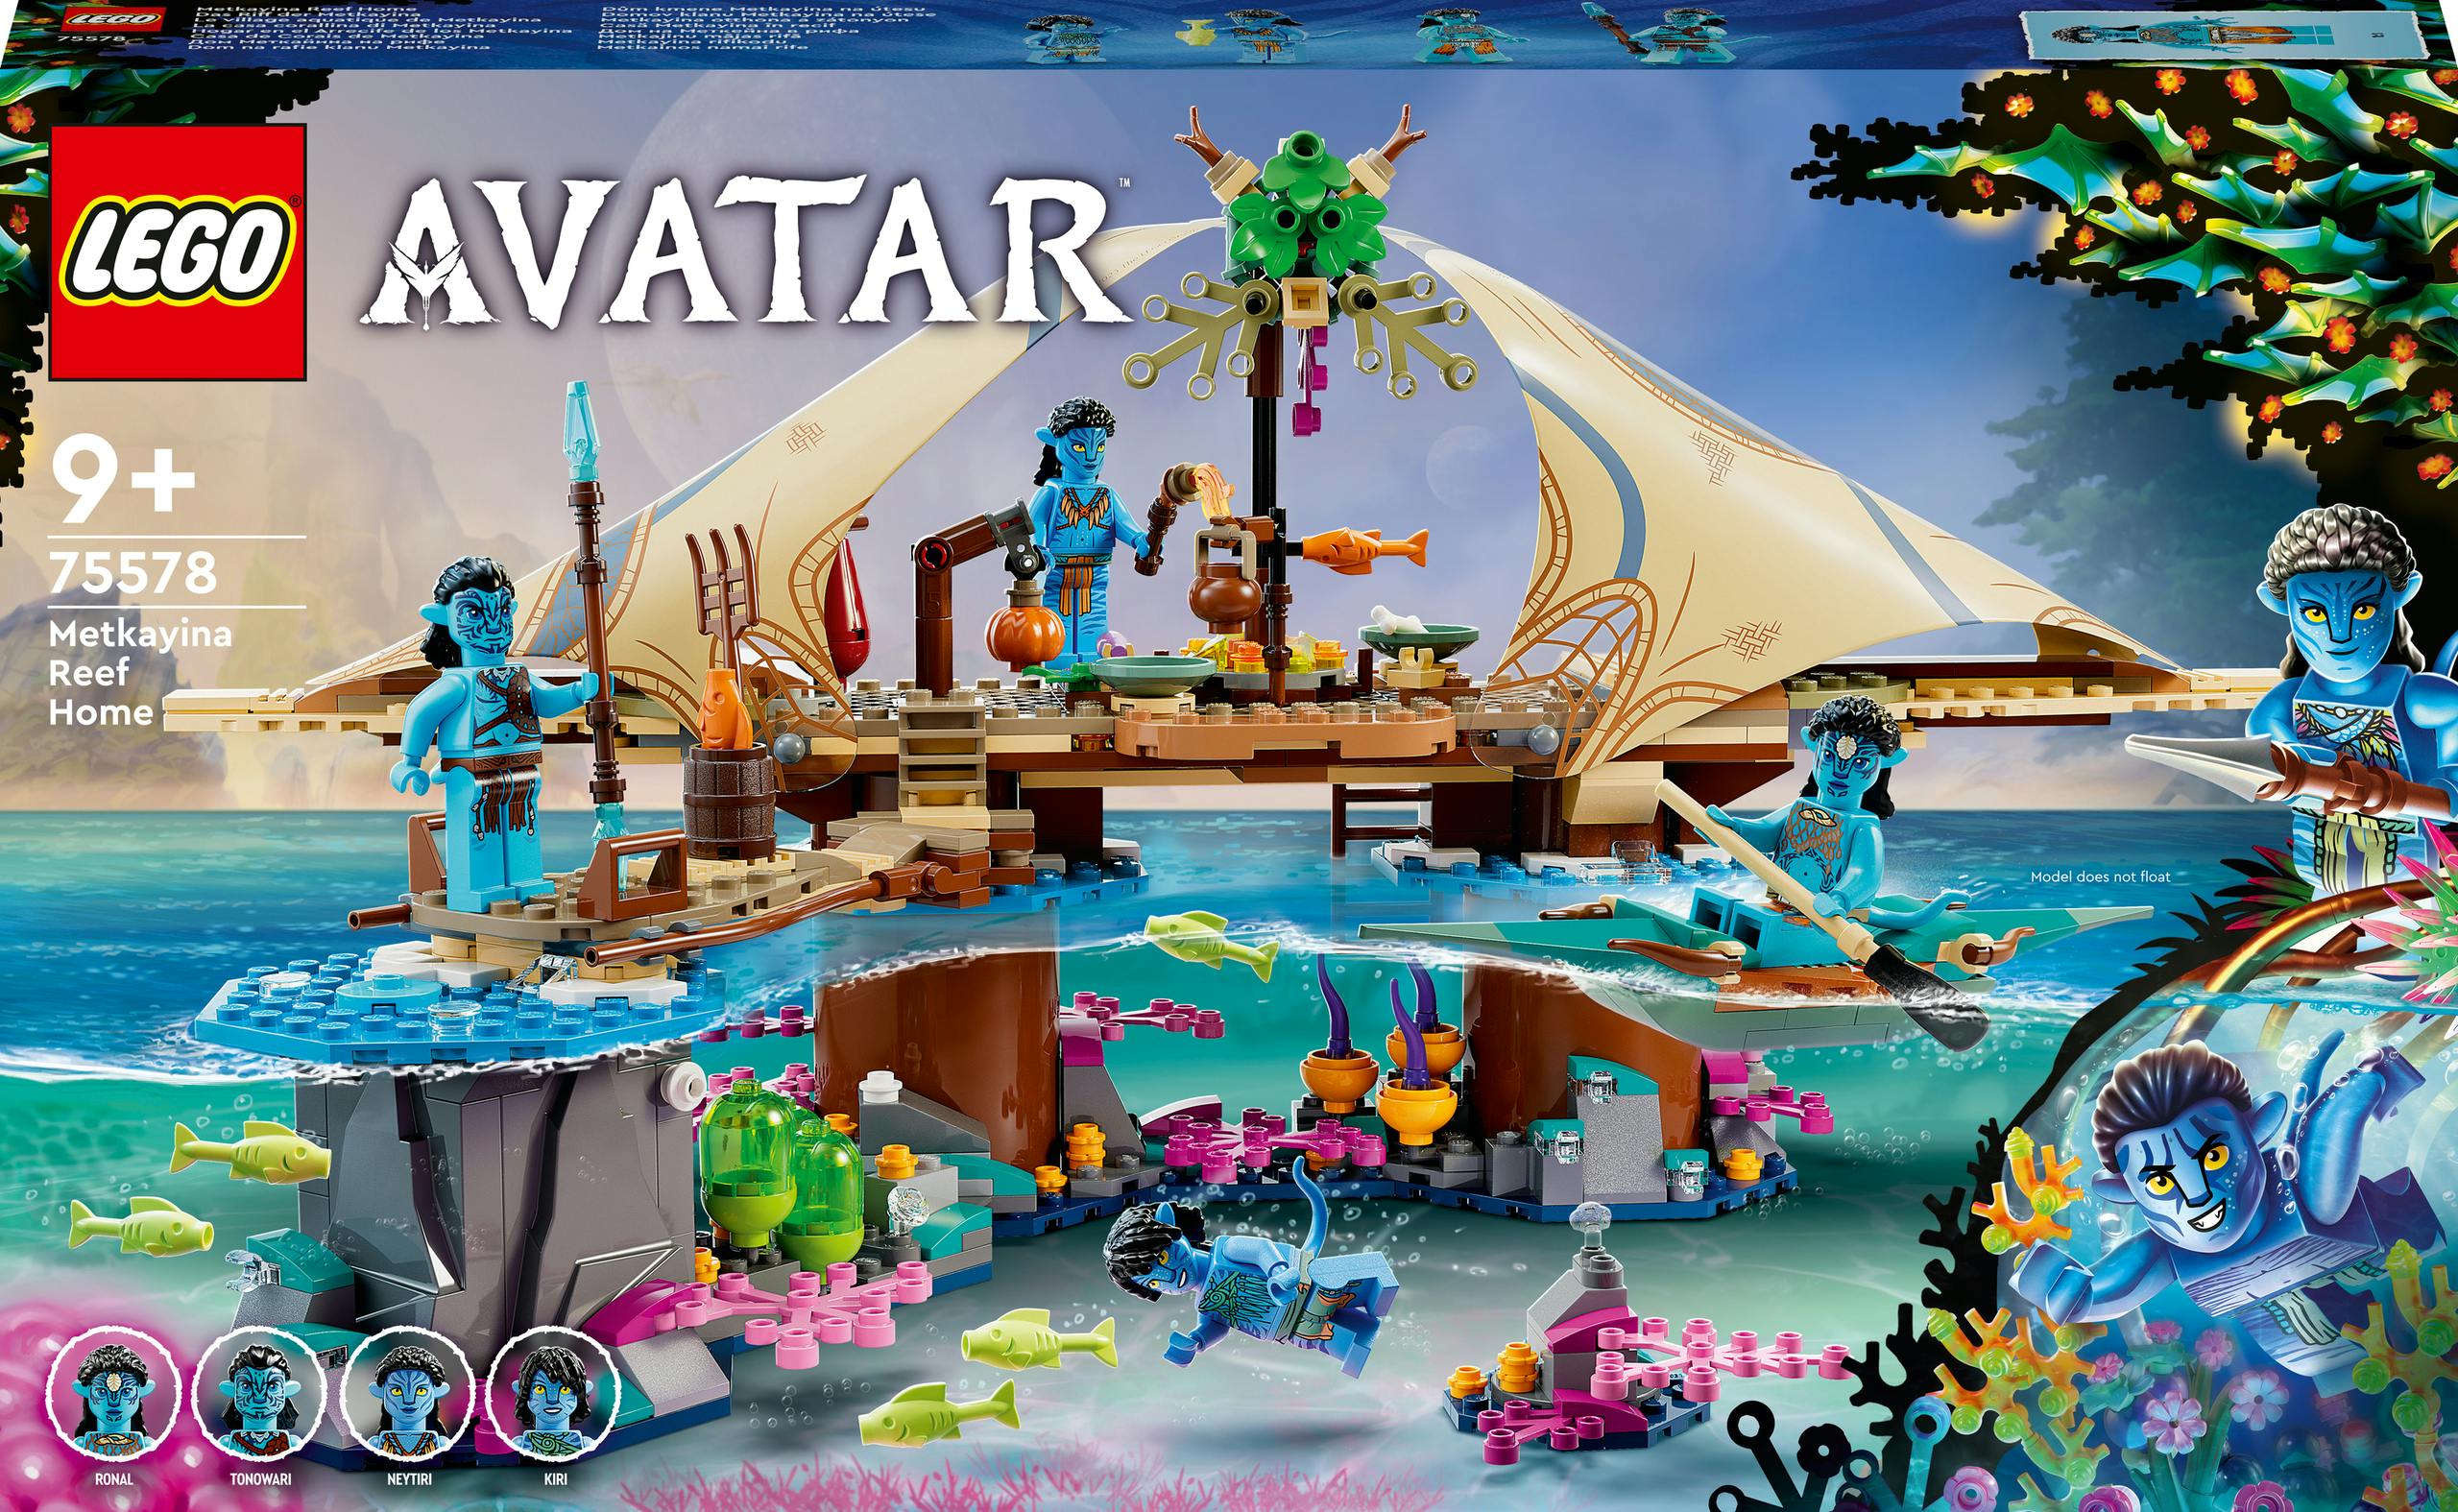 LEGO Avatar Huis In Metkayina Rif (75578)